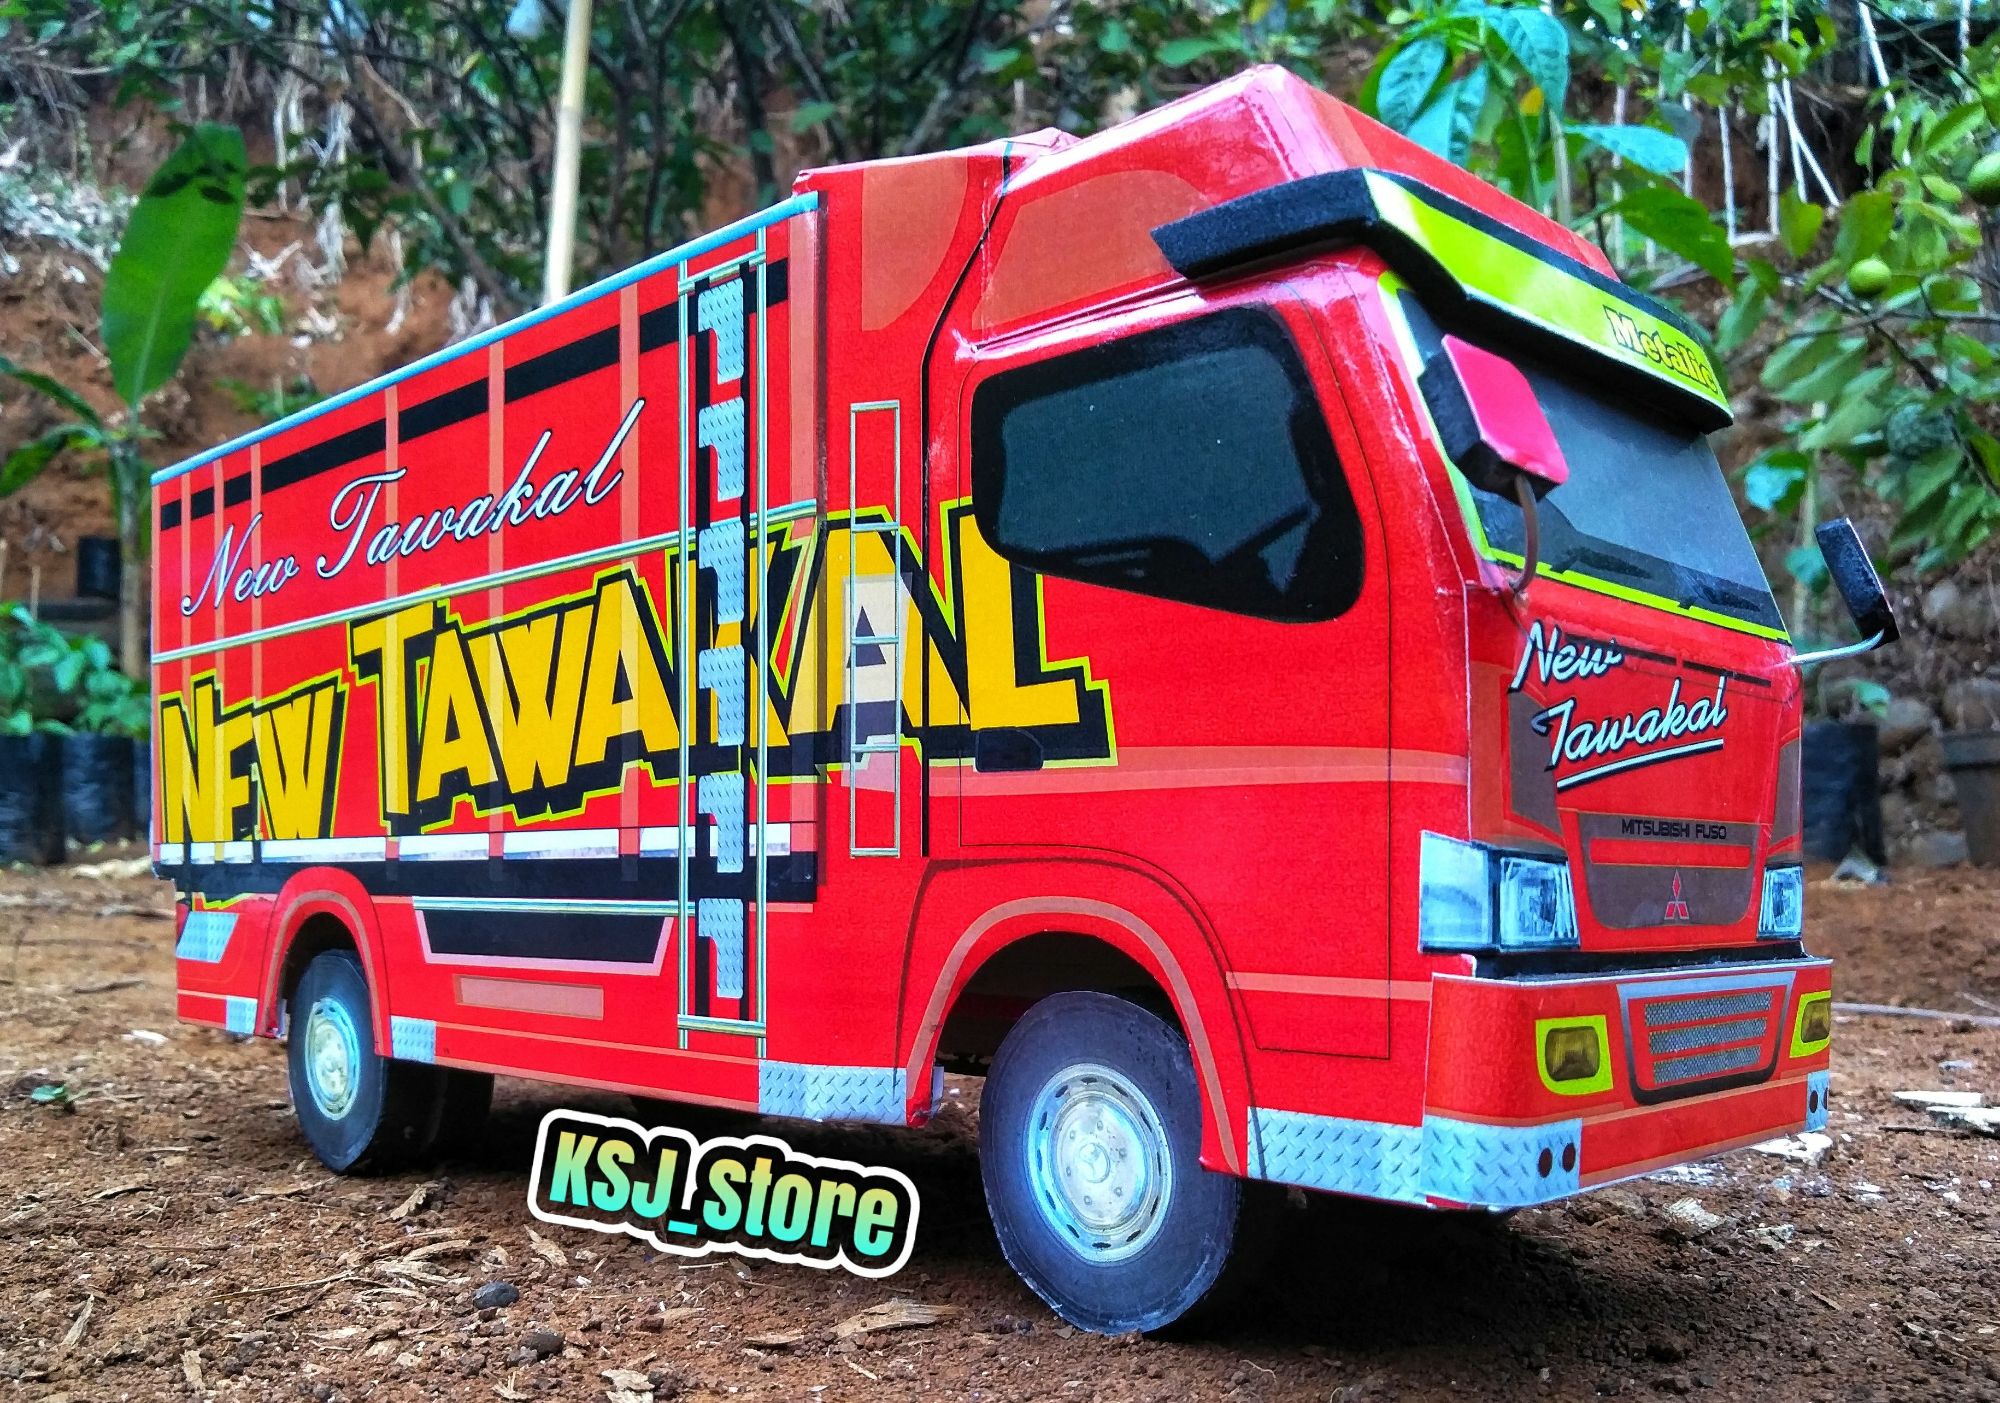 Miniatur Truk New Tawakal Mainan Anak Murah Lazada Indonesia